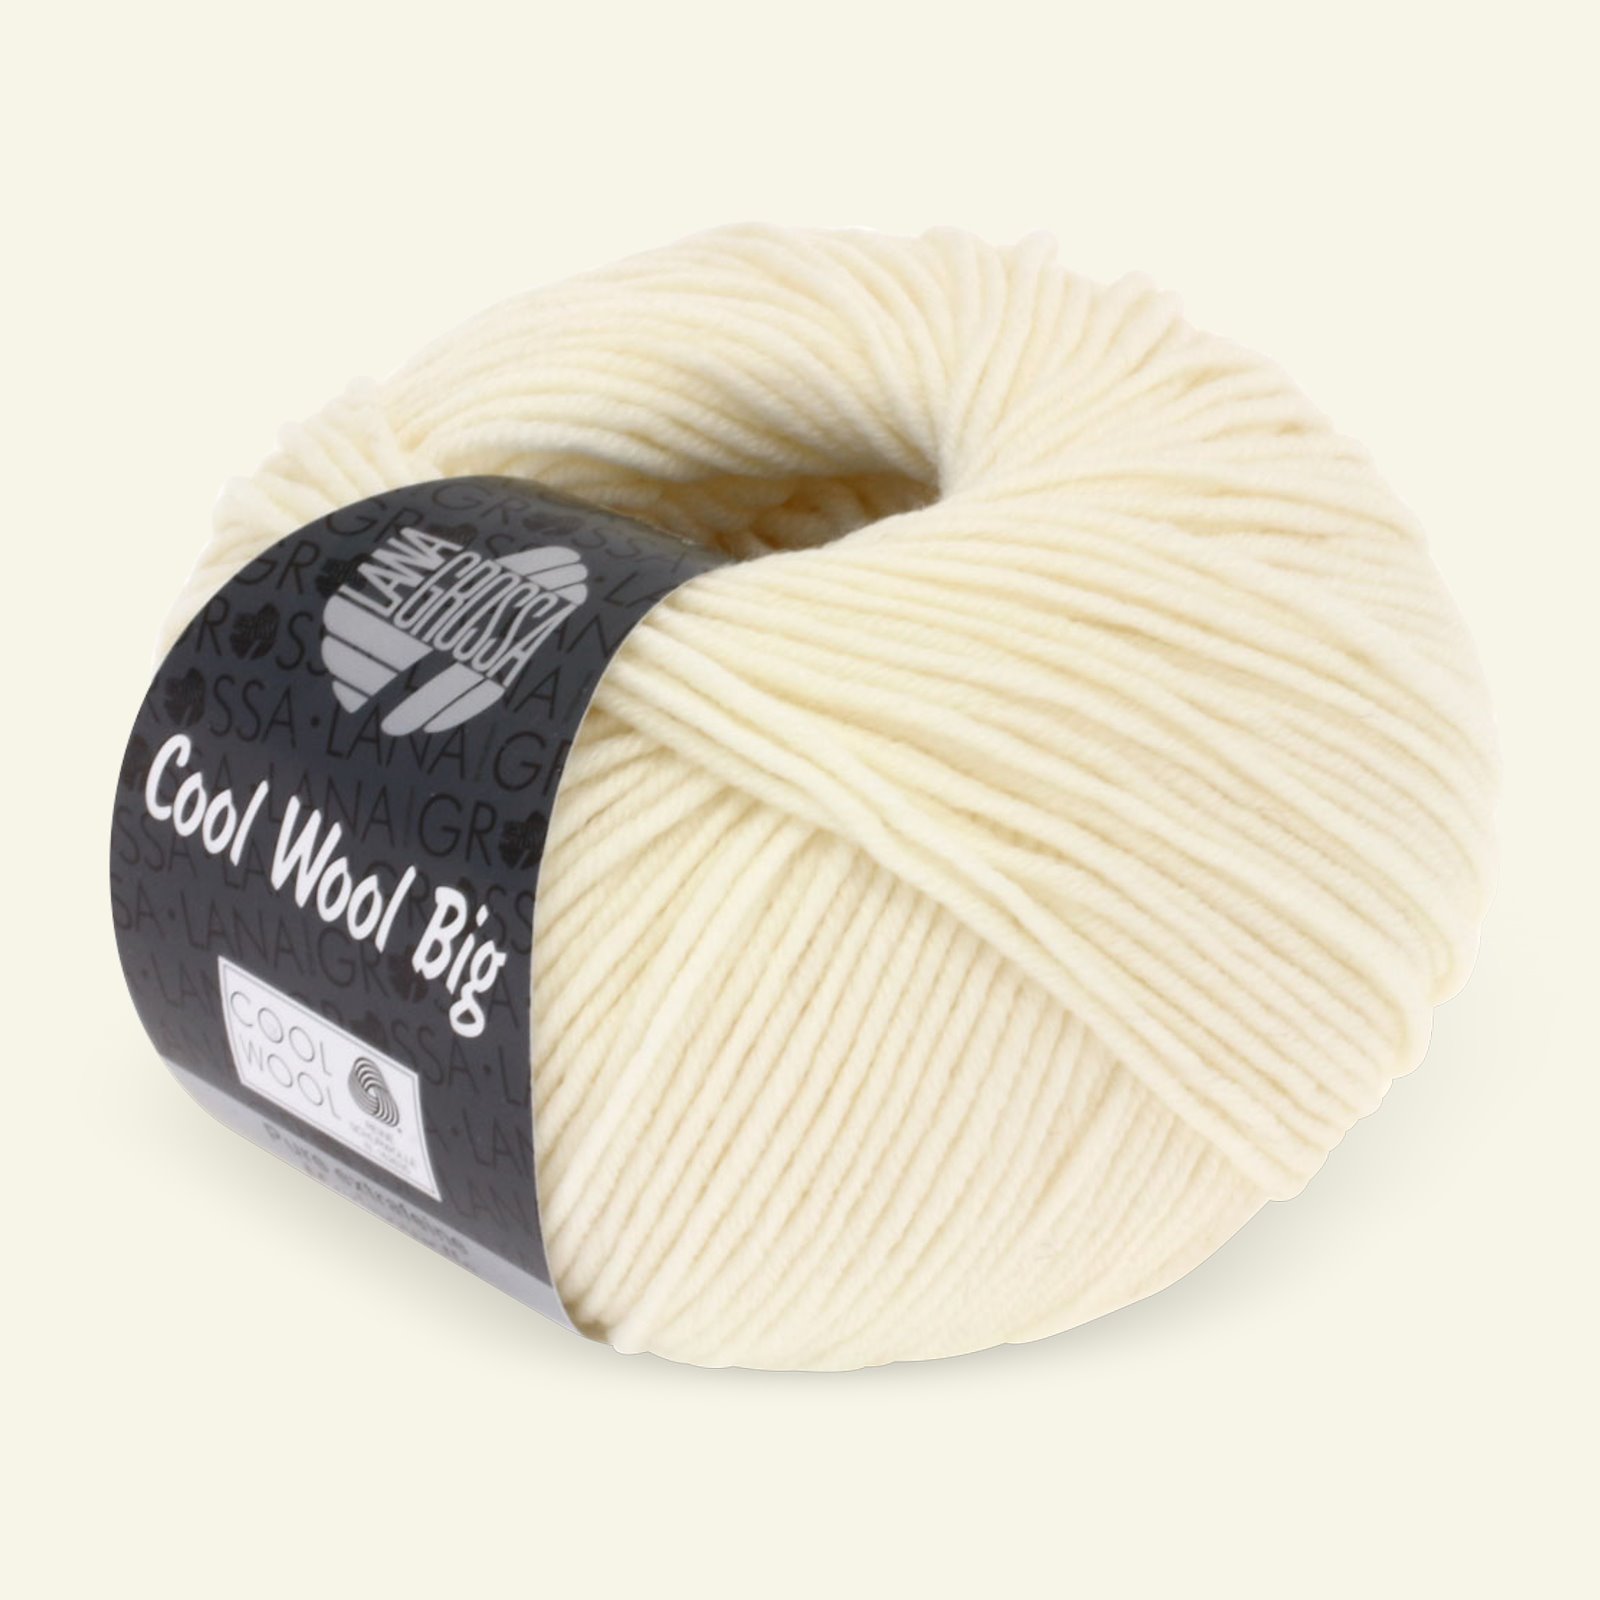 Lana Grossa, extrafine merino ullgarn "Cool Wool Big", offwhite 90001109_pack